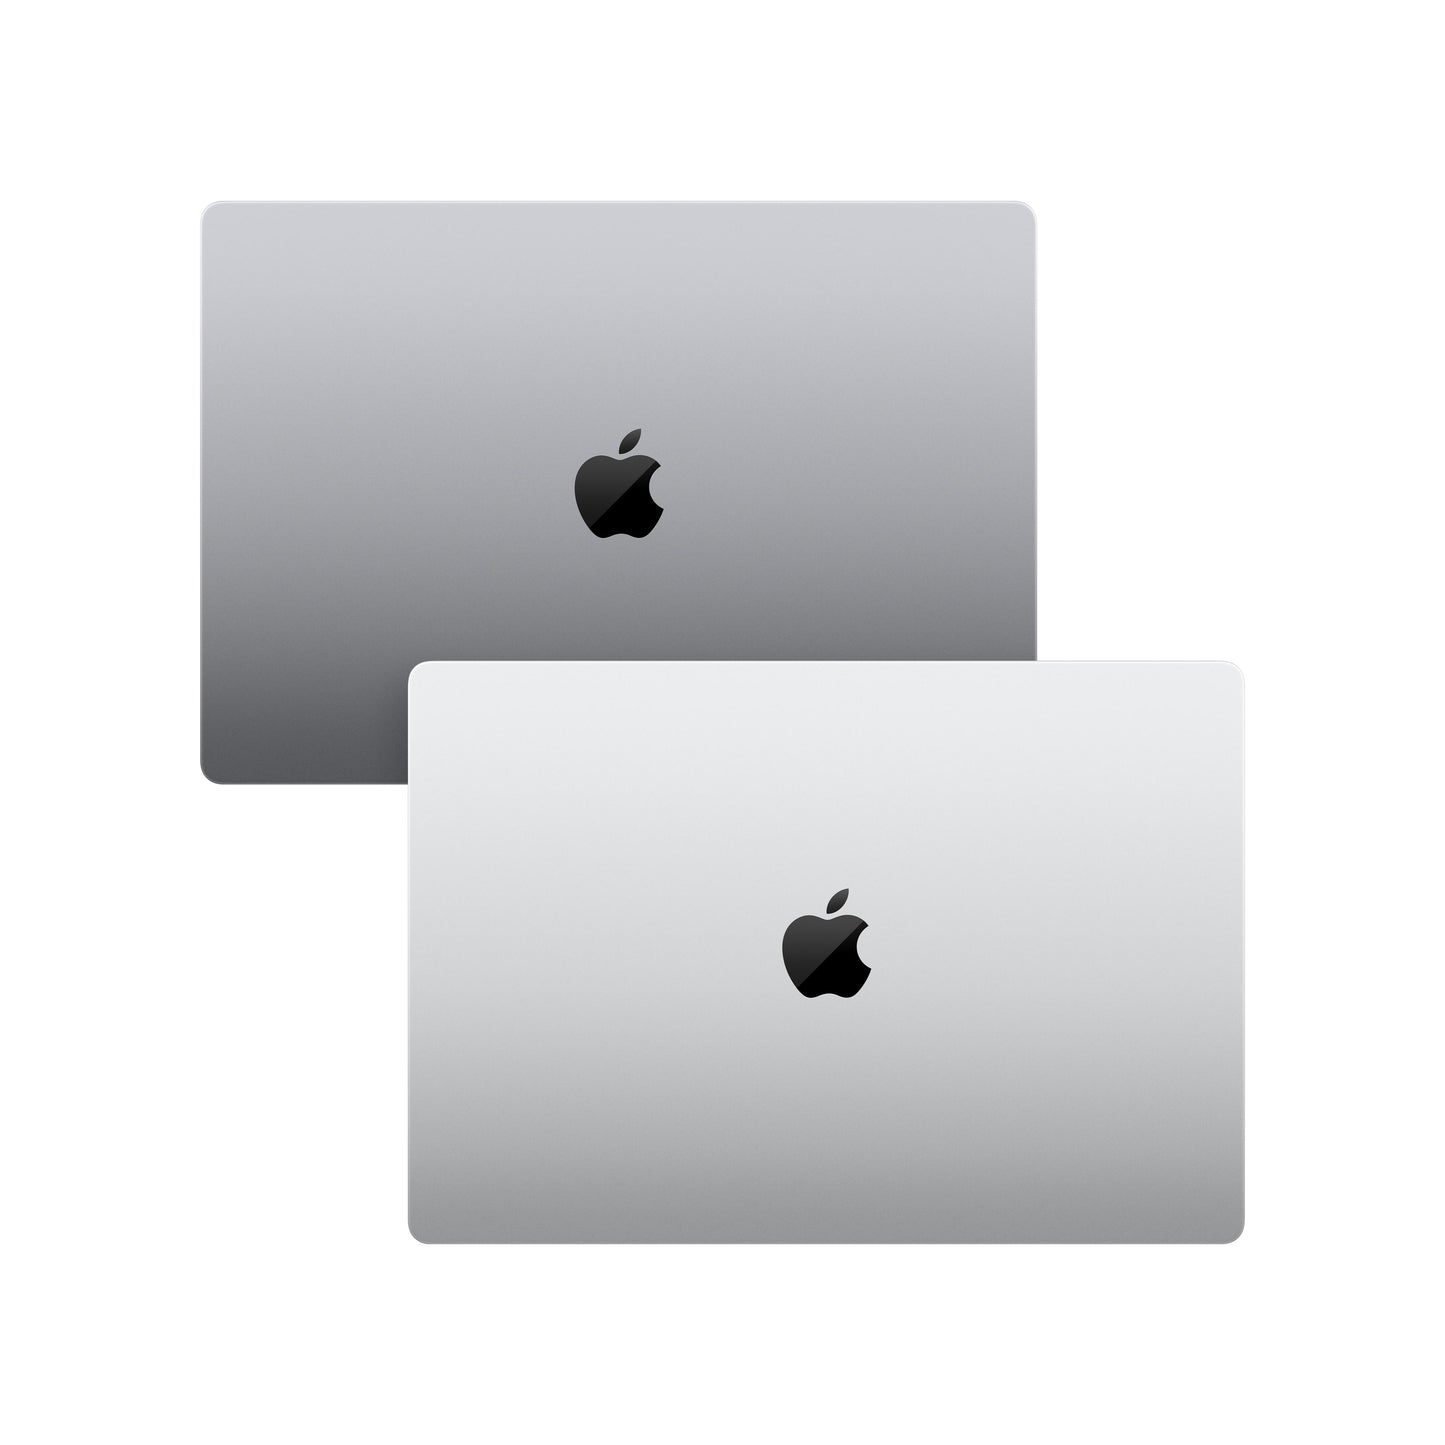 16-inch MacBook Pro: Apple M1 Pro chip with 10_core CPU and 16_core GPU 512GB SSD - Silver